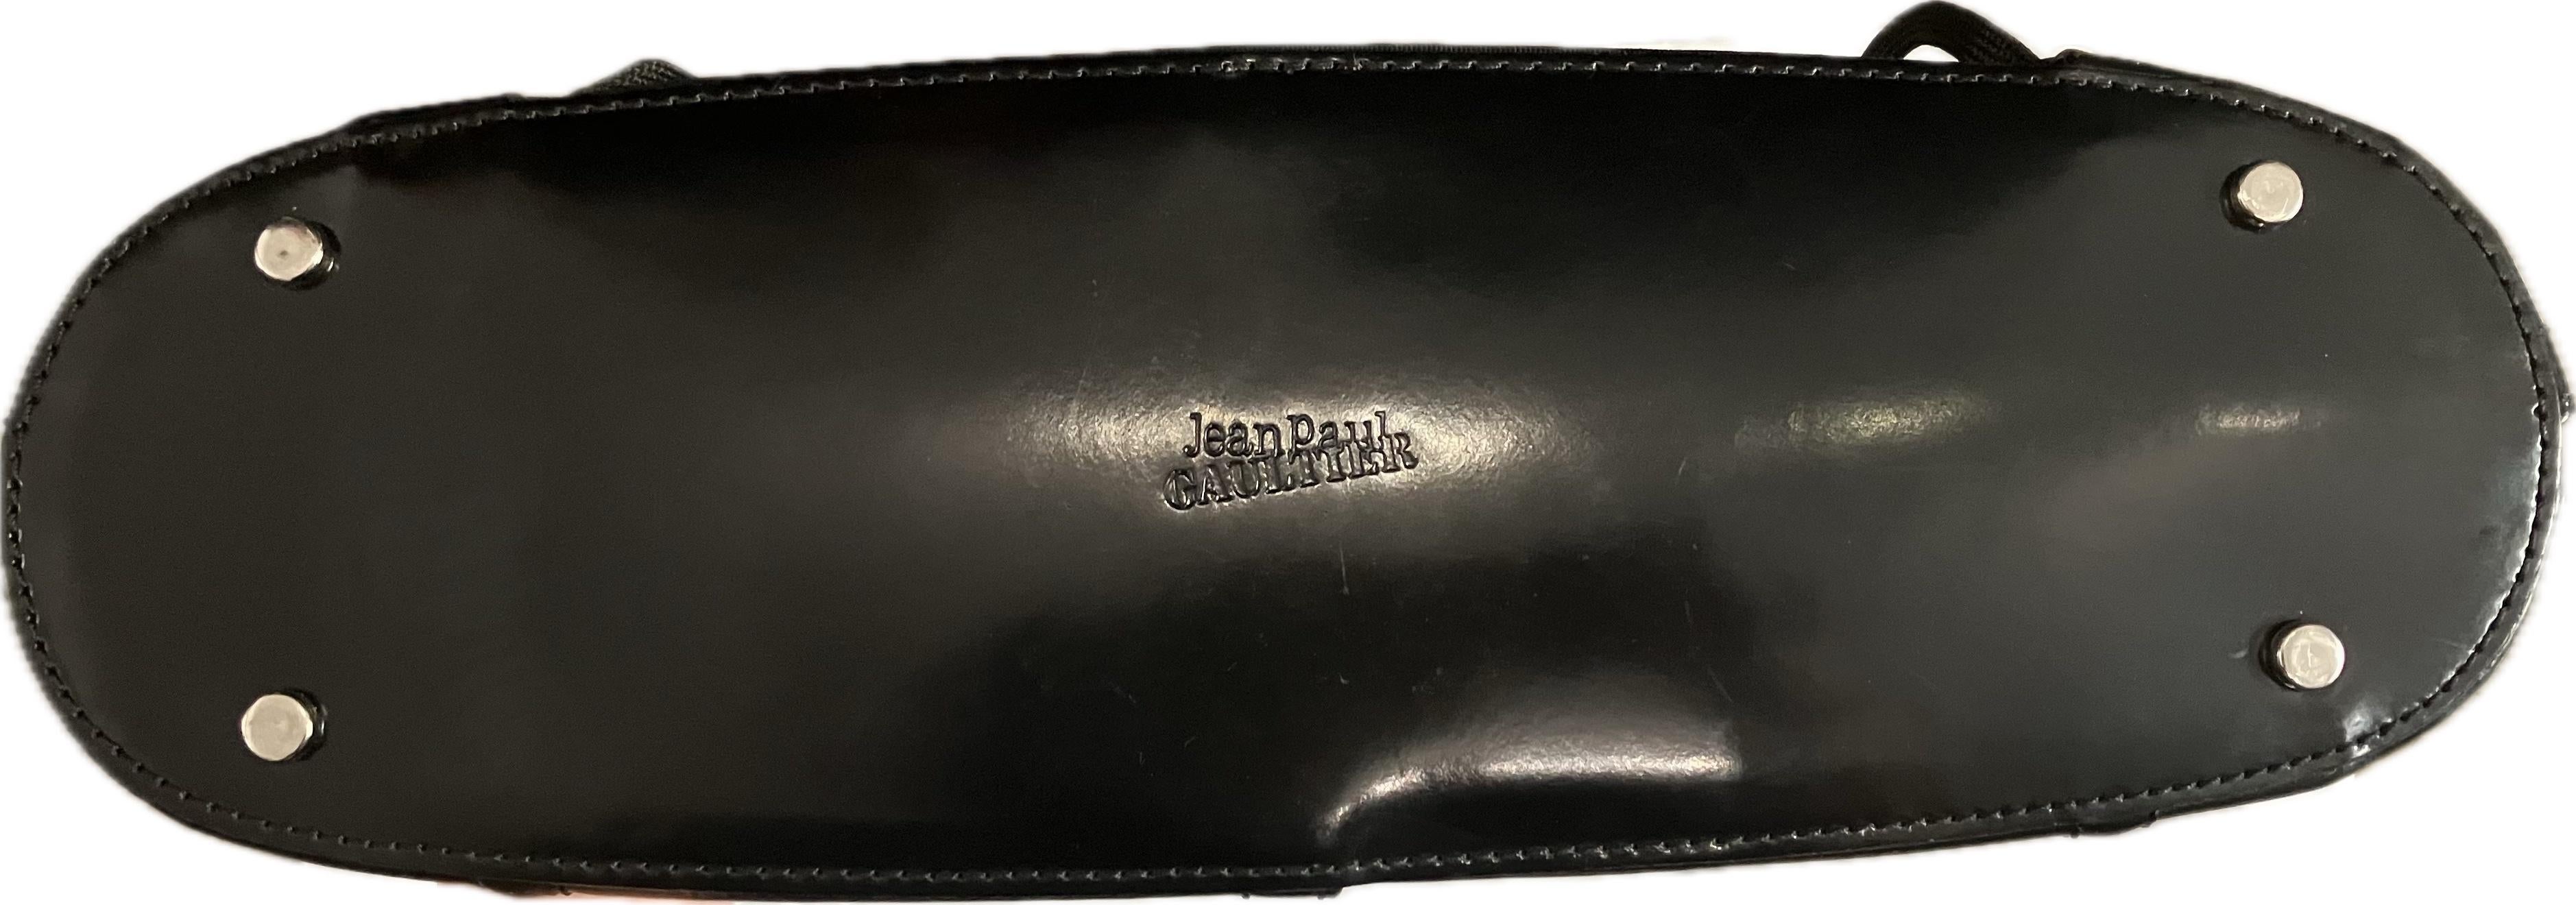 Jean Paul Gaultier Black Corset Leather Shoulder Bag For Sale 3